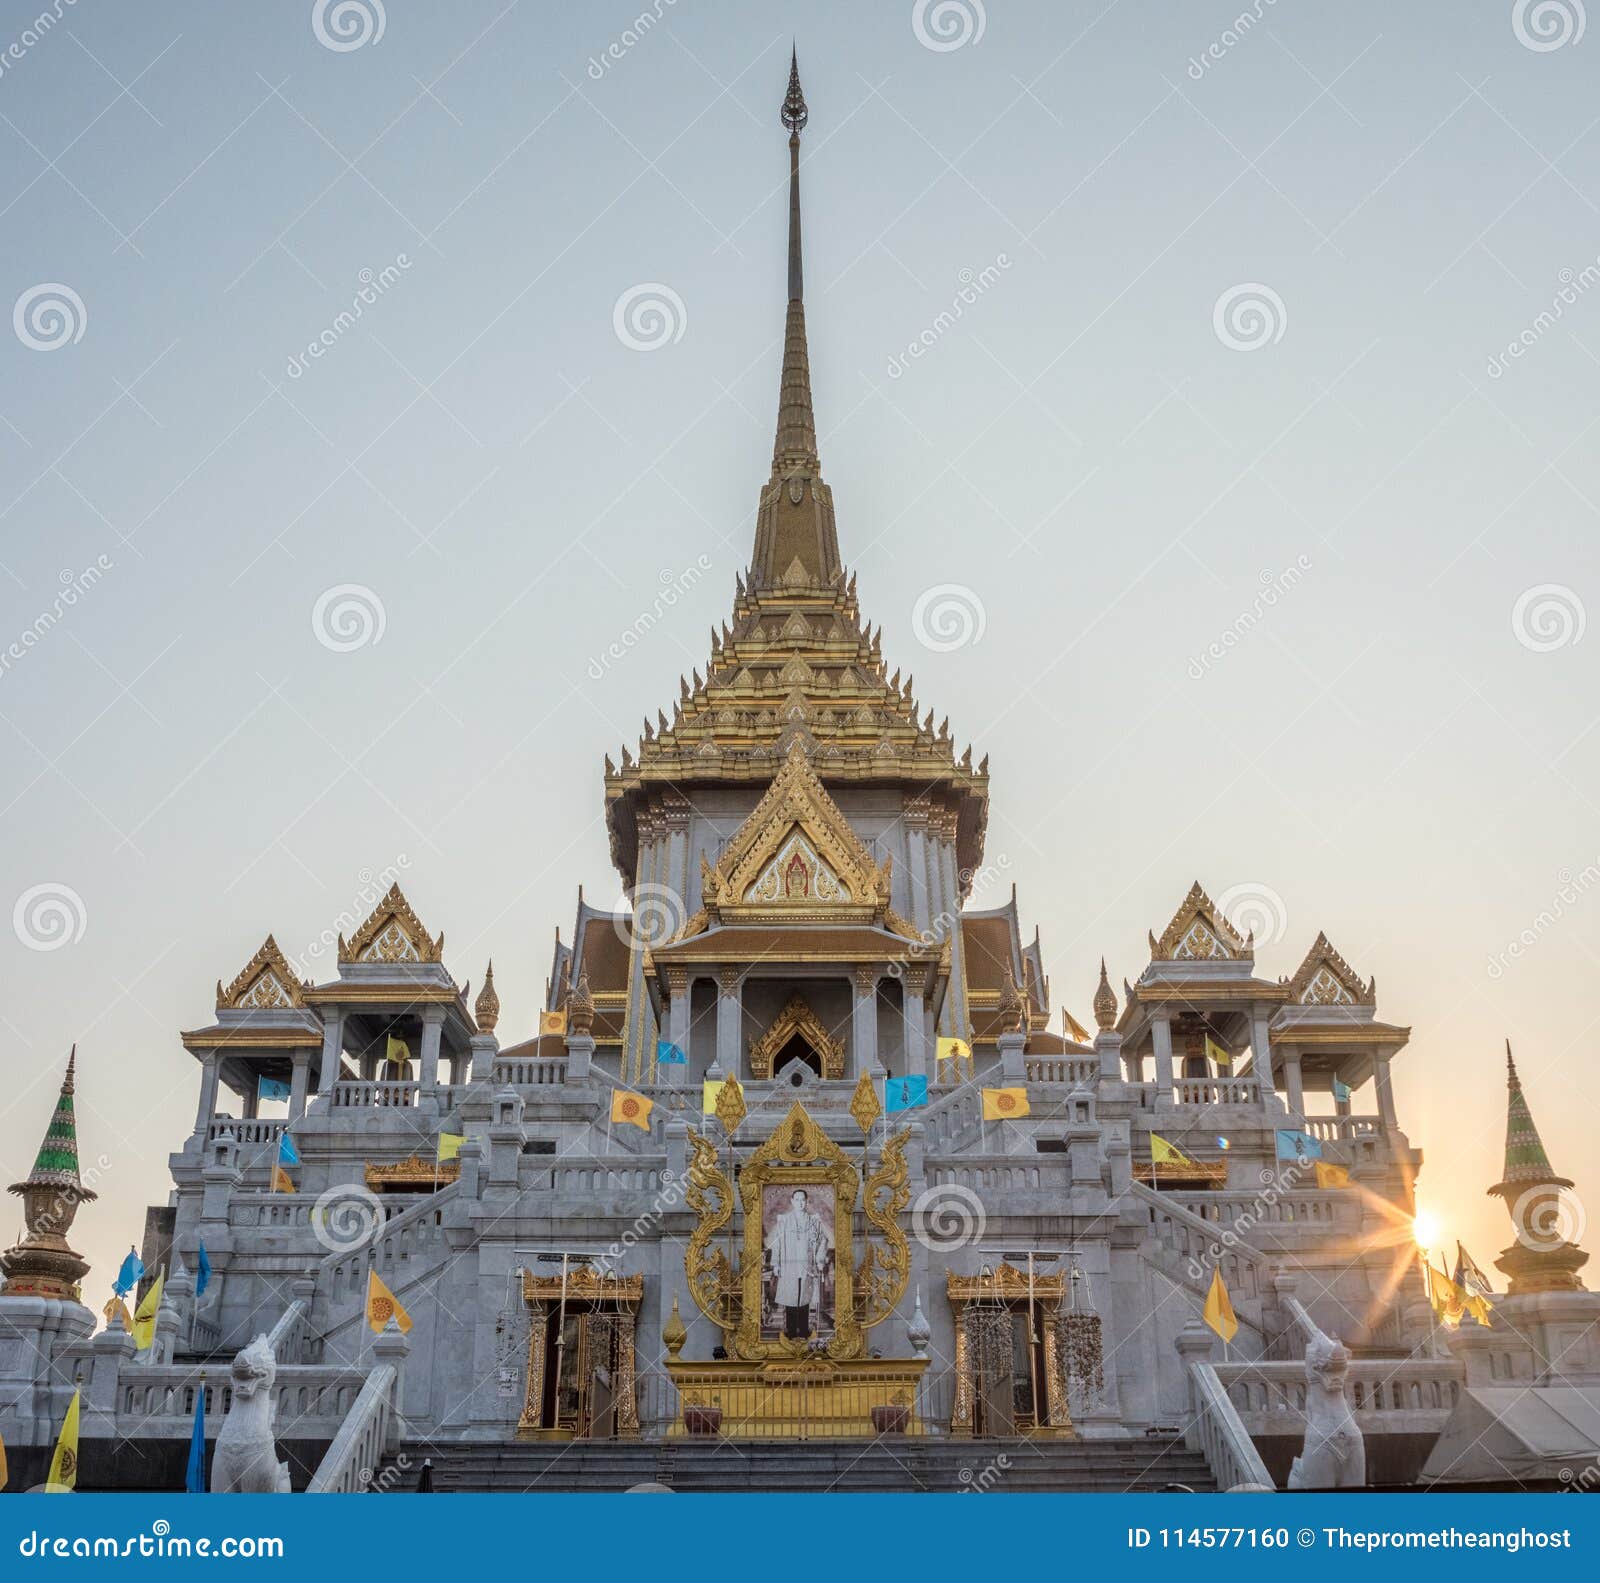 wat traimit, temple of the golden buddha